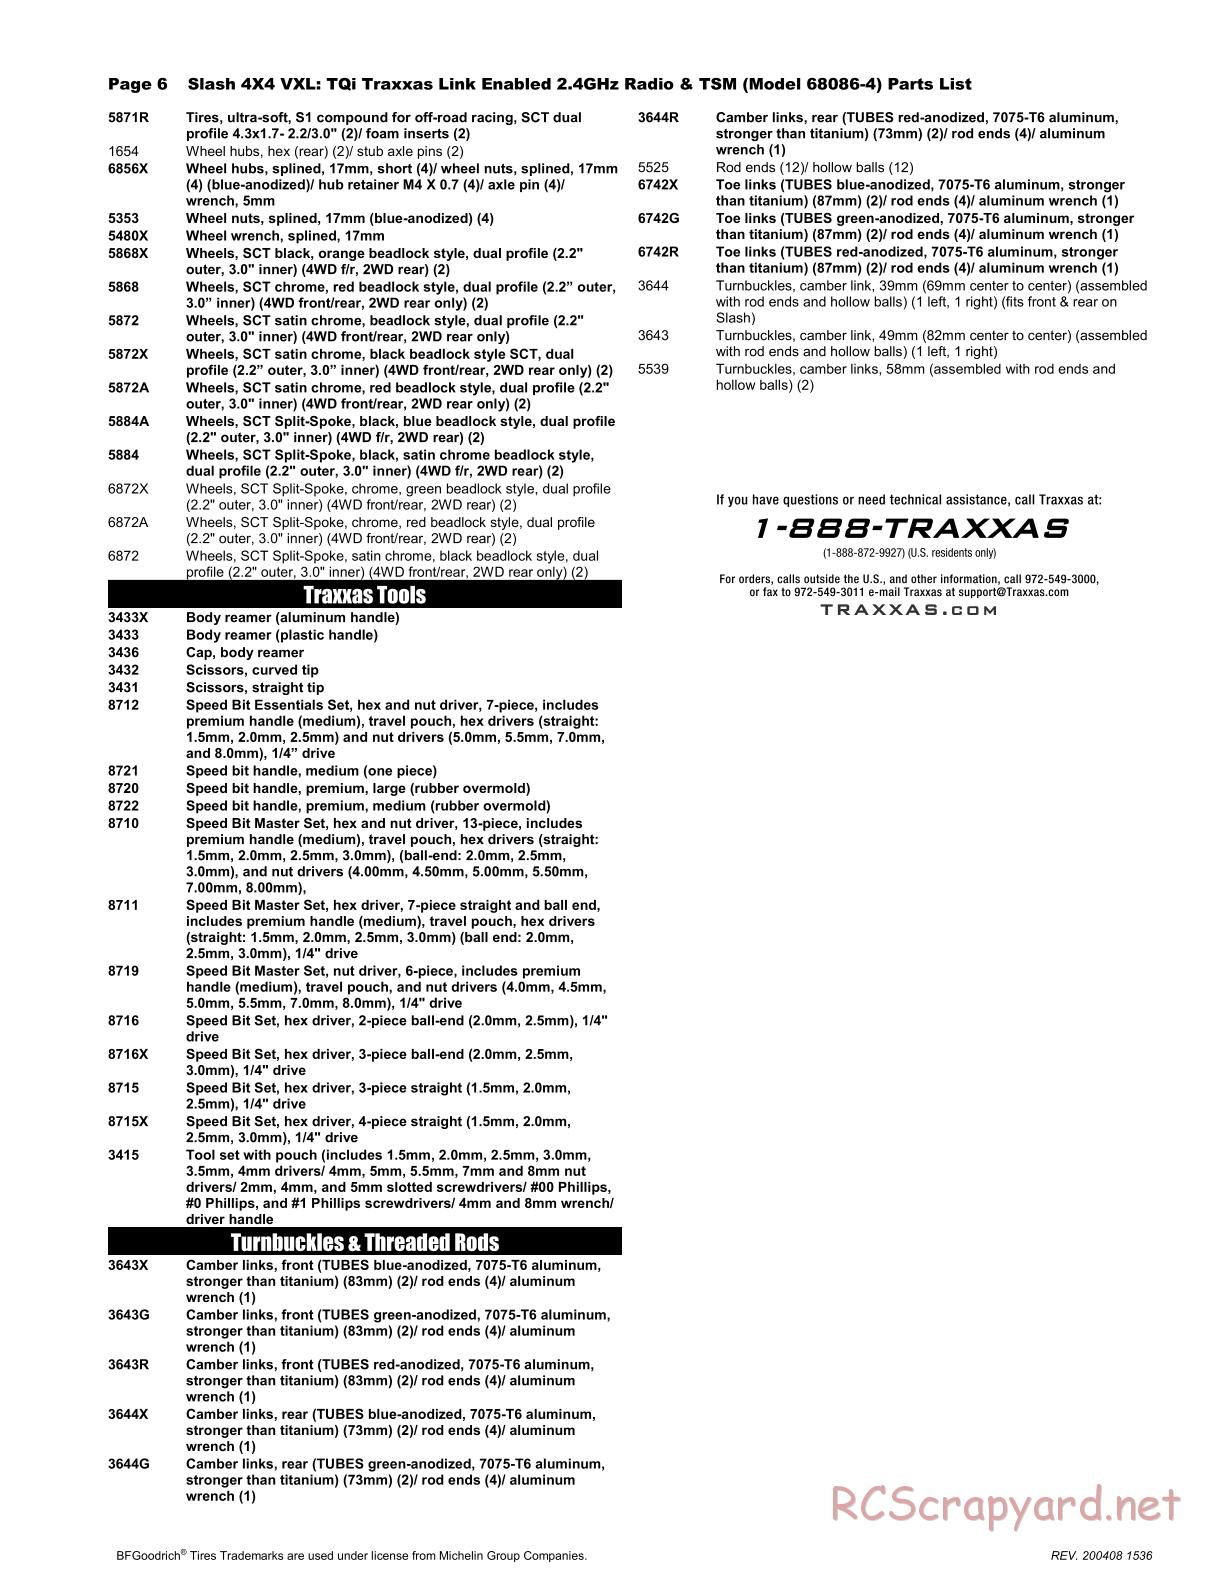 Traxxas - Slash 4x4 VXL - Parts List - Page 6